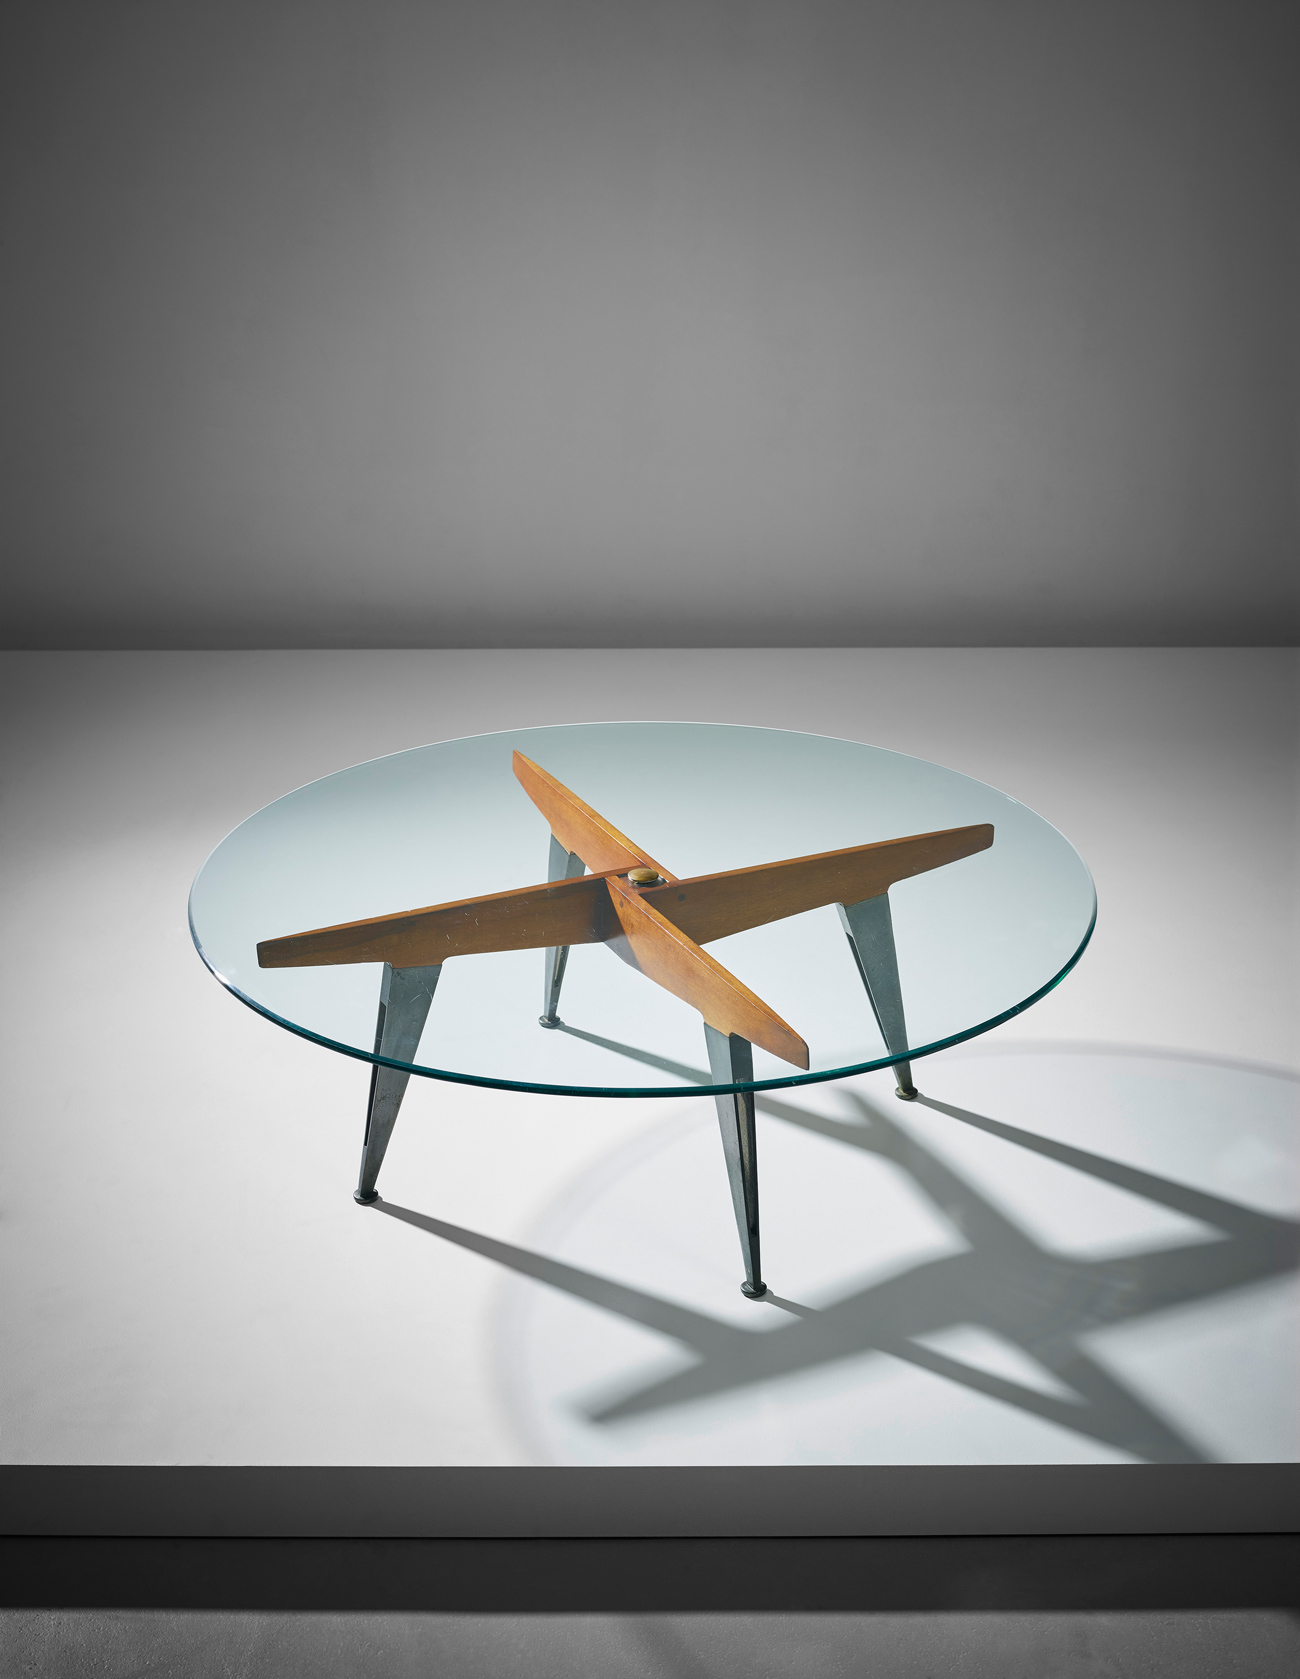 Джо Понти.&nbsp;​Кофейный столик, 1953.&nbsp;​Эстимейт &pound;35 000&ndash;45,000. Phillips, Аукцион Modern Masters&amp;Design, 26 и 27 апреля, Лондон